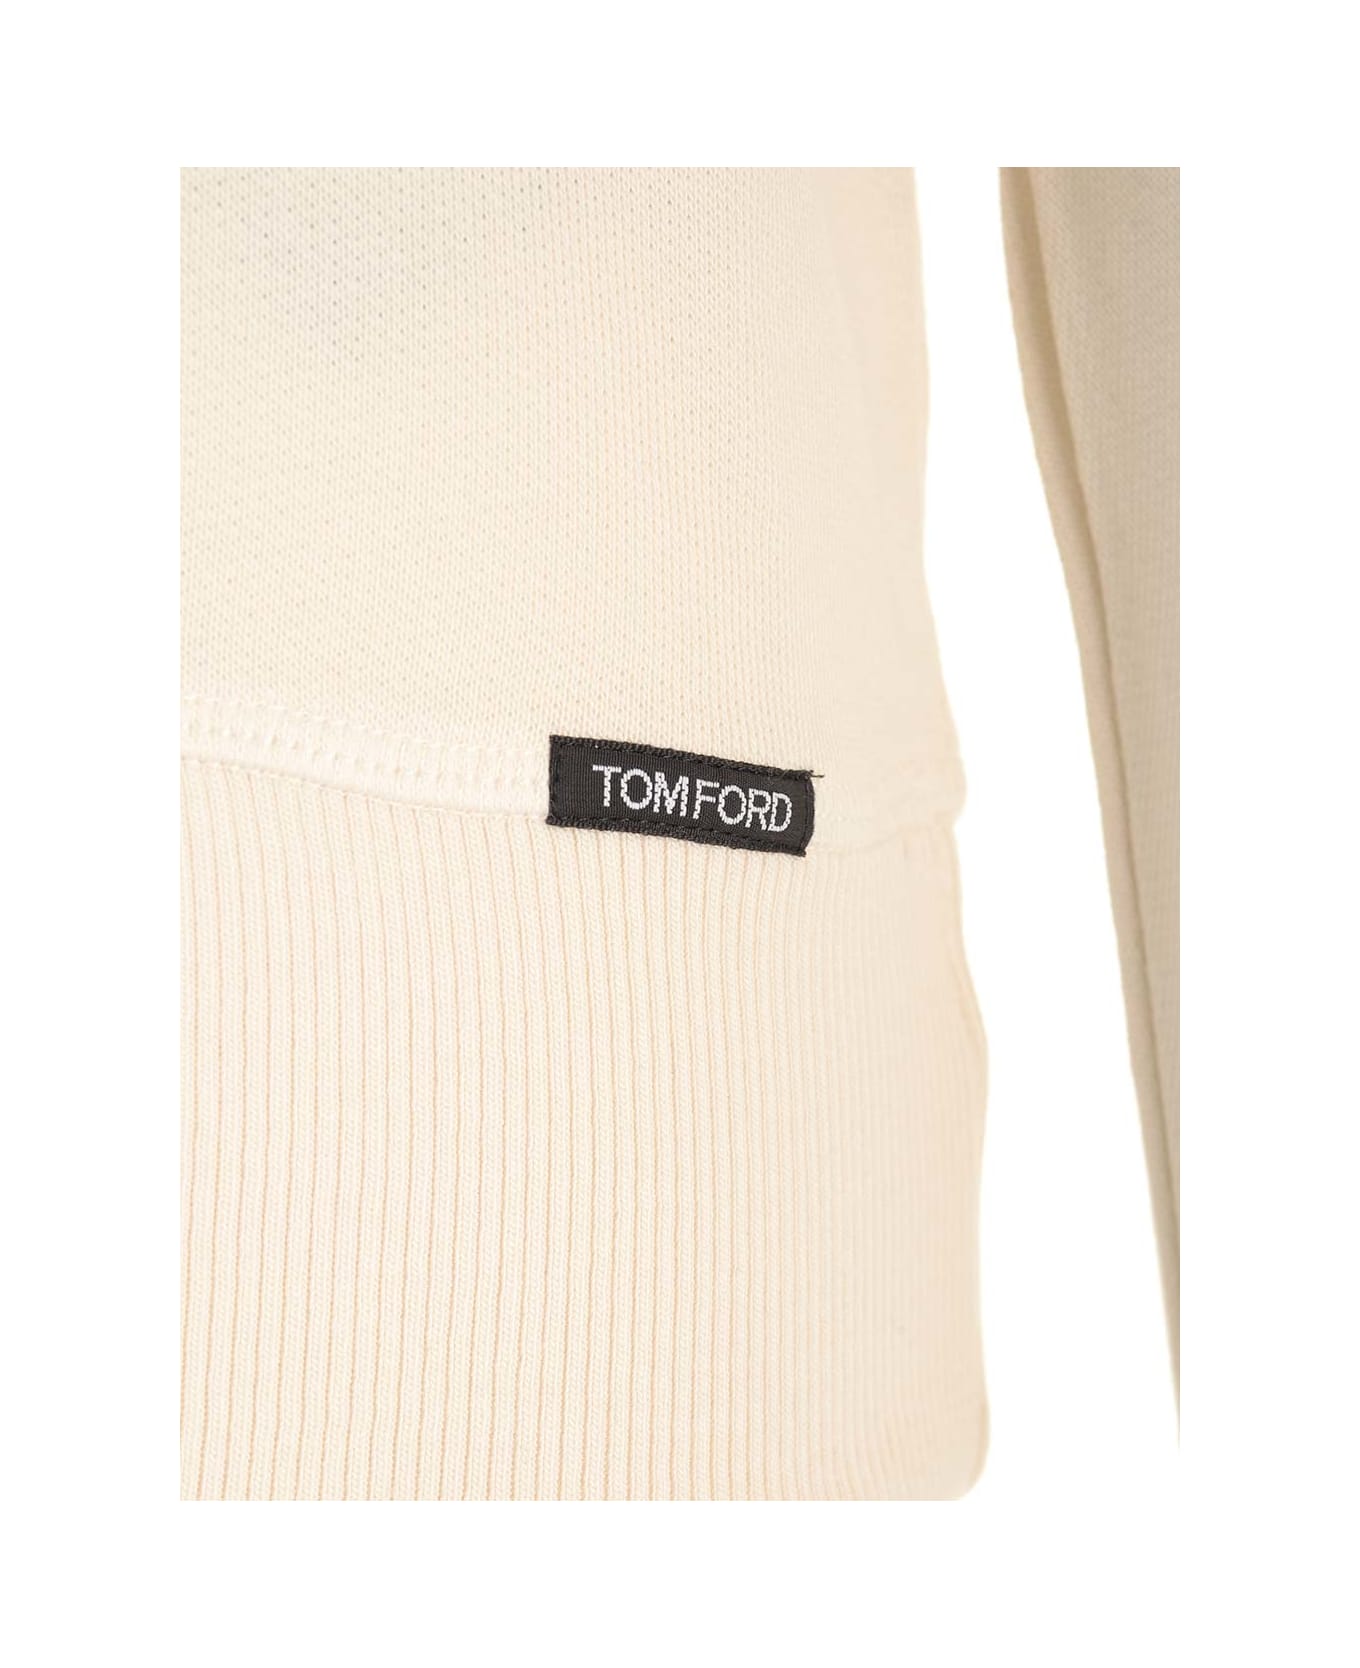 Tom Ford Lightweight Jersey Sweatshirt - Ivory